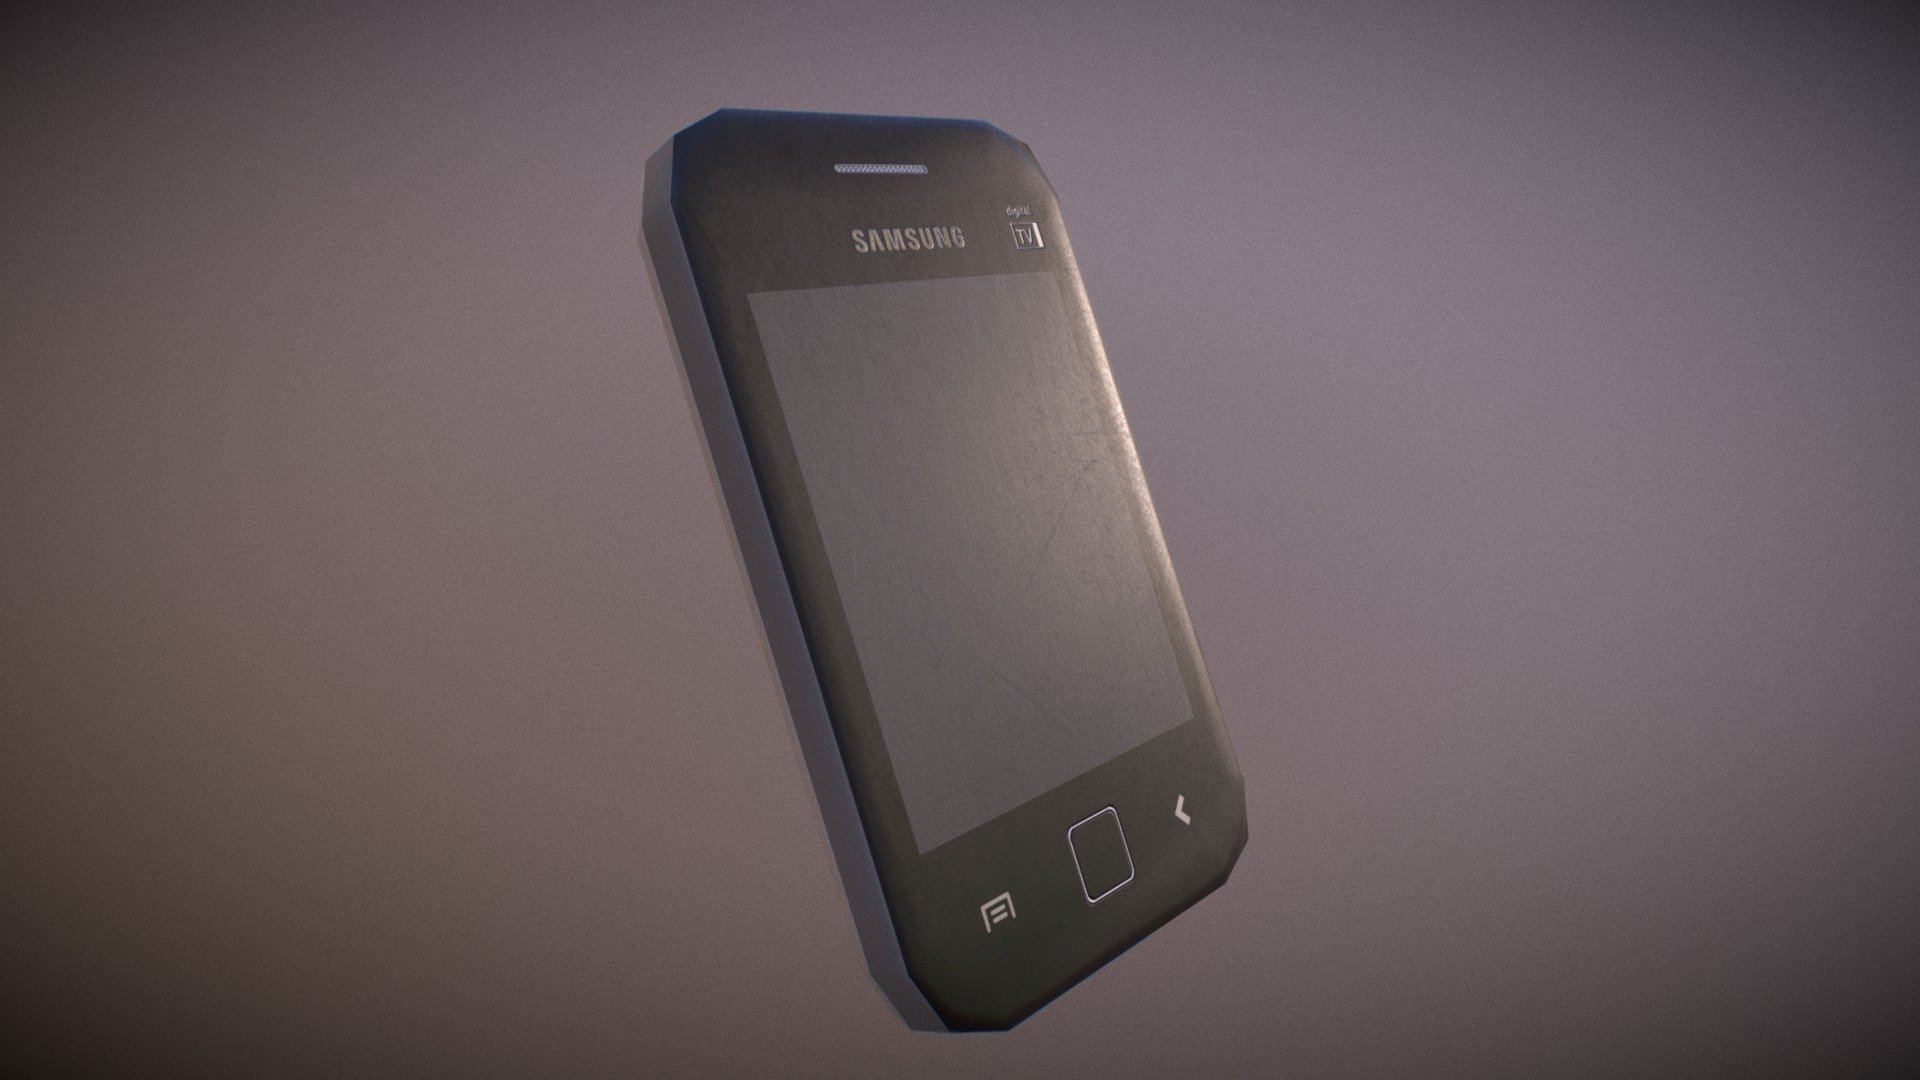 Free Samsung GT-S5360 / GT-S5363 Galaxy Y Minecraft Pocket Edition